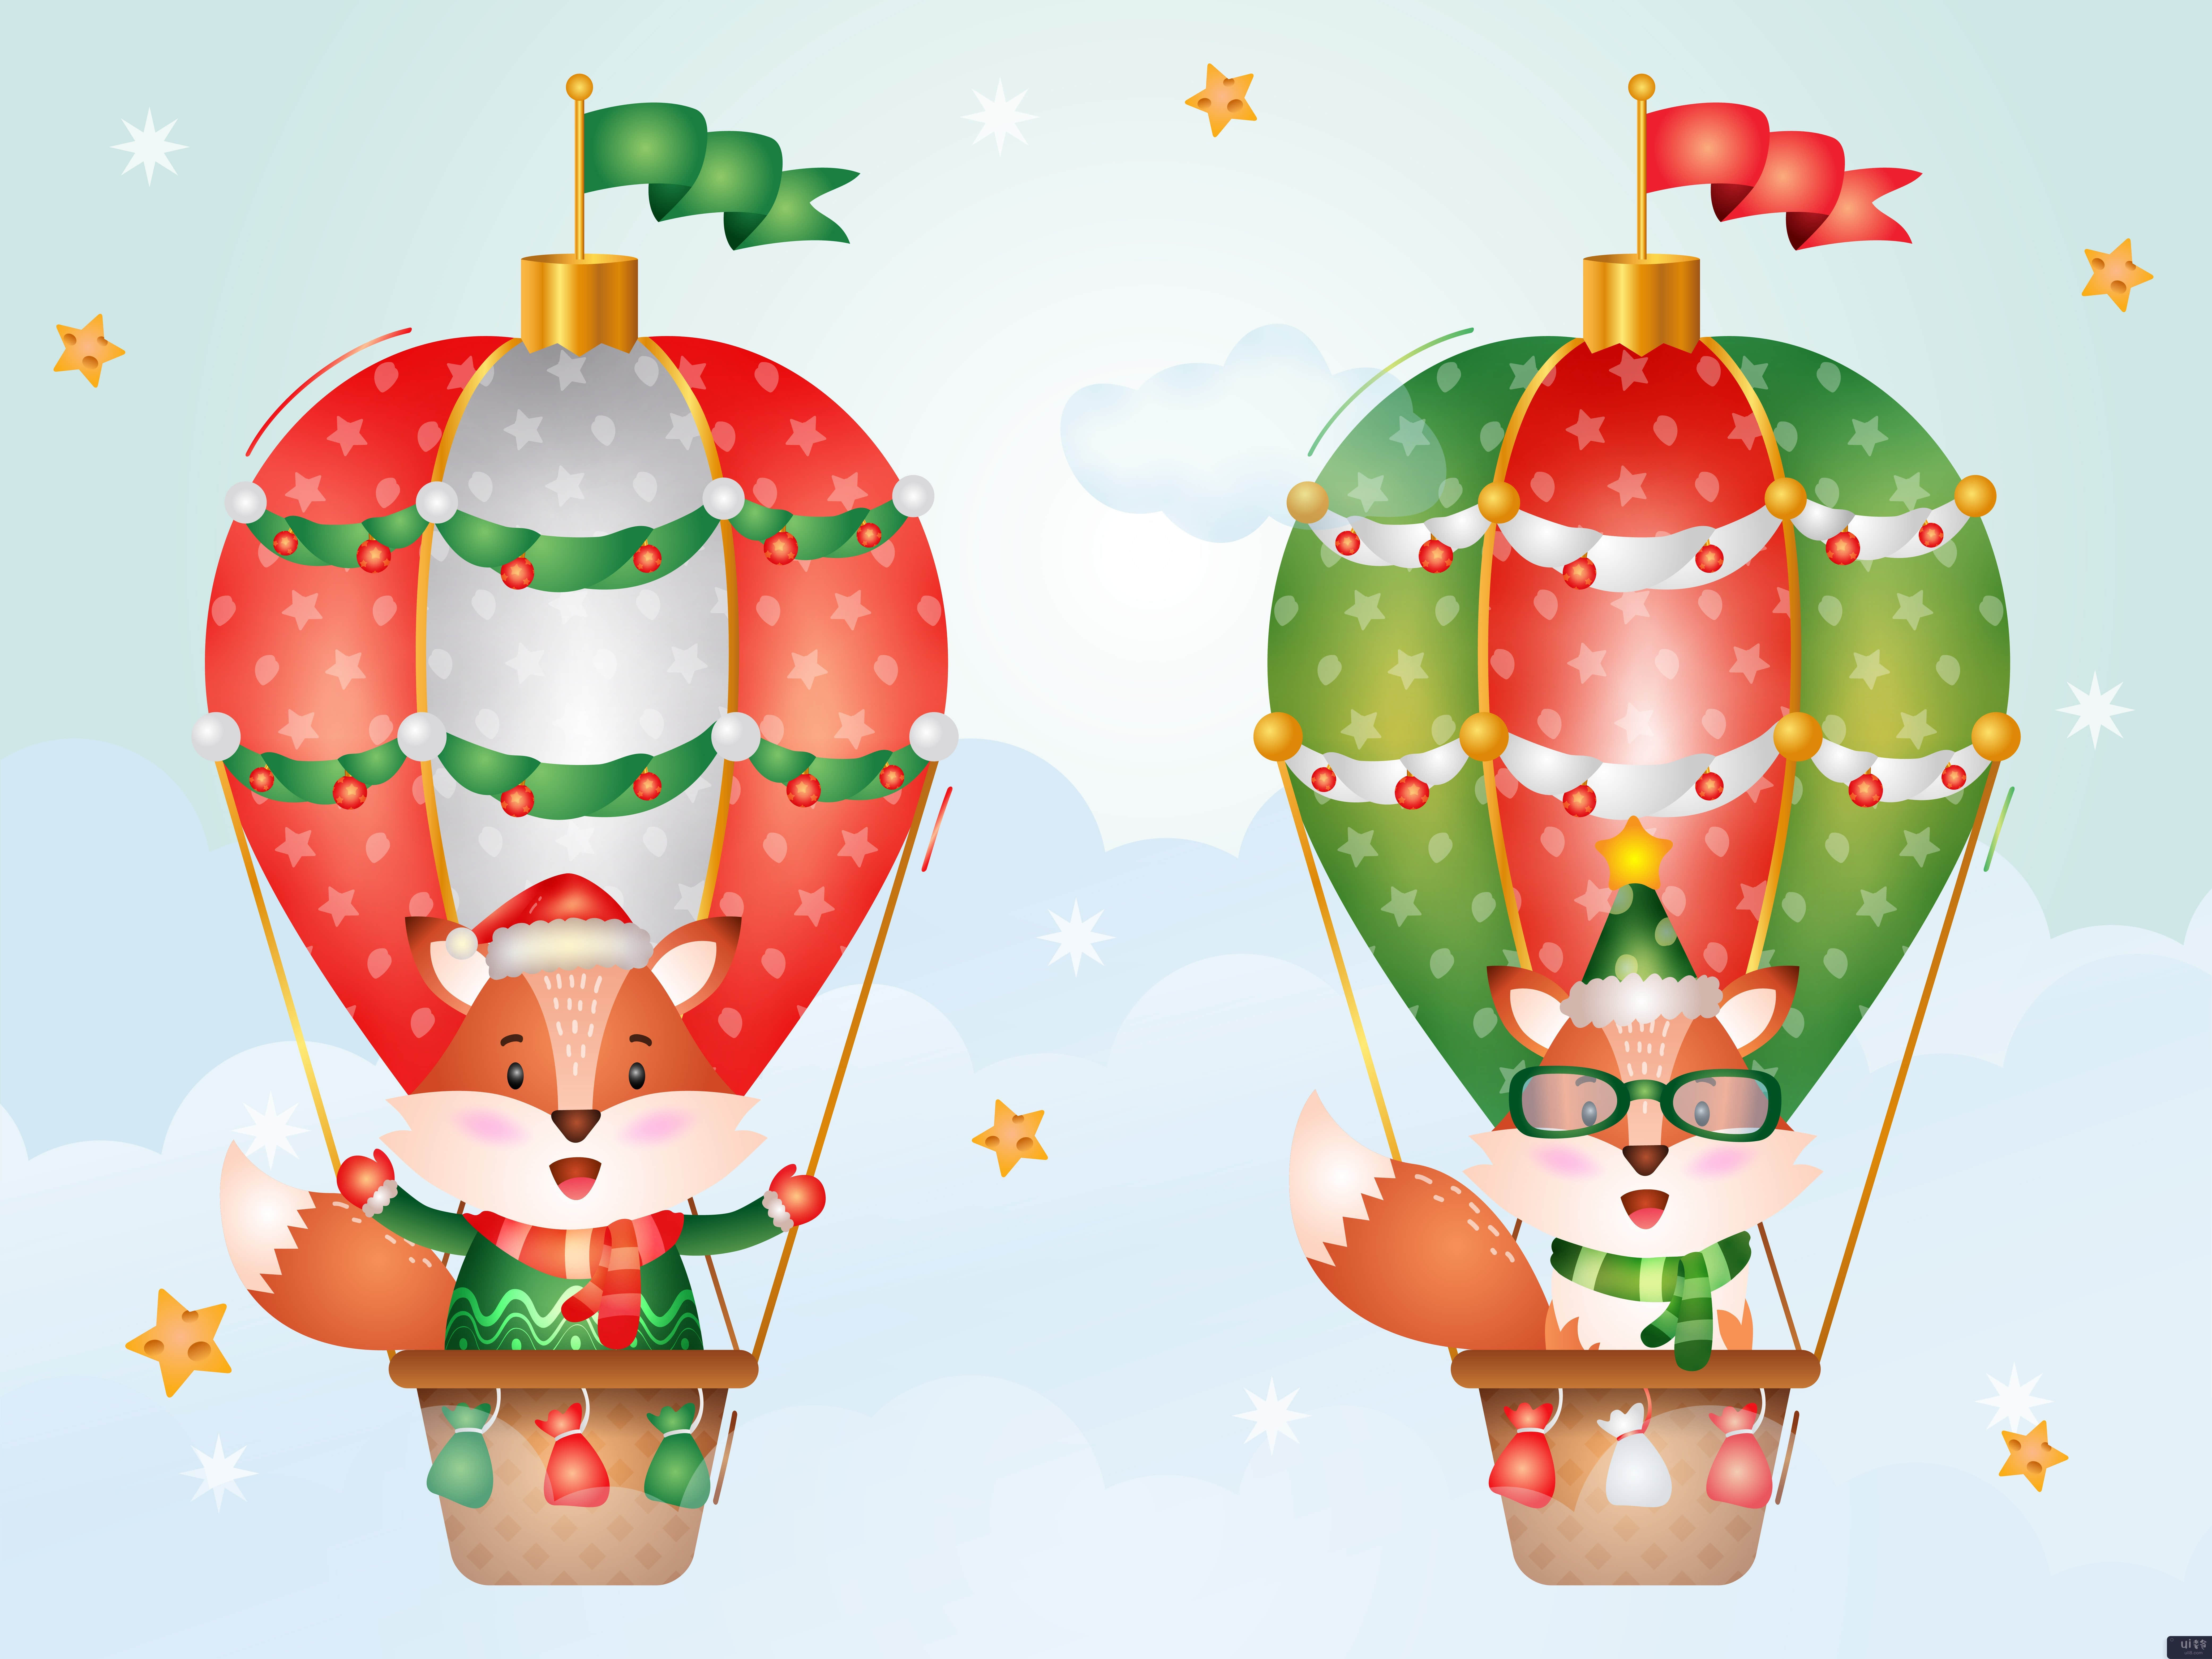 热气球上可爱的狐狸圣诞人物(Cute fox christmas characters on hot air balloon)插图